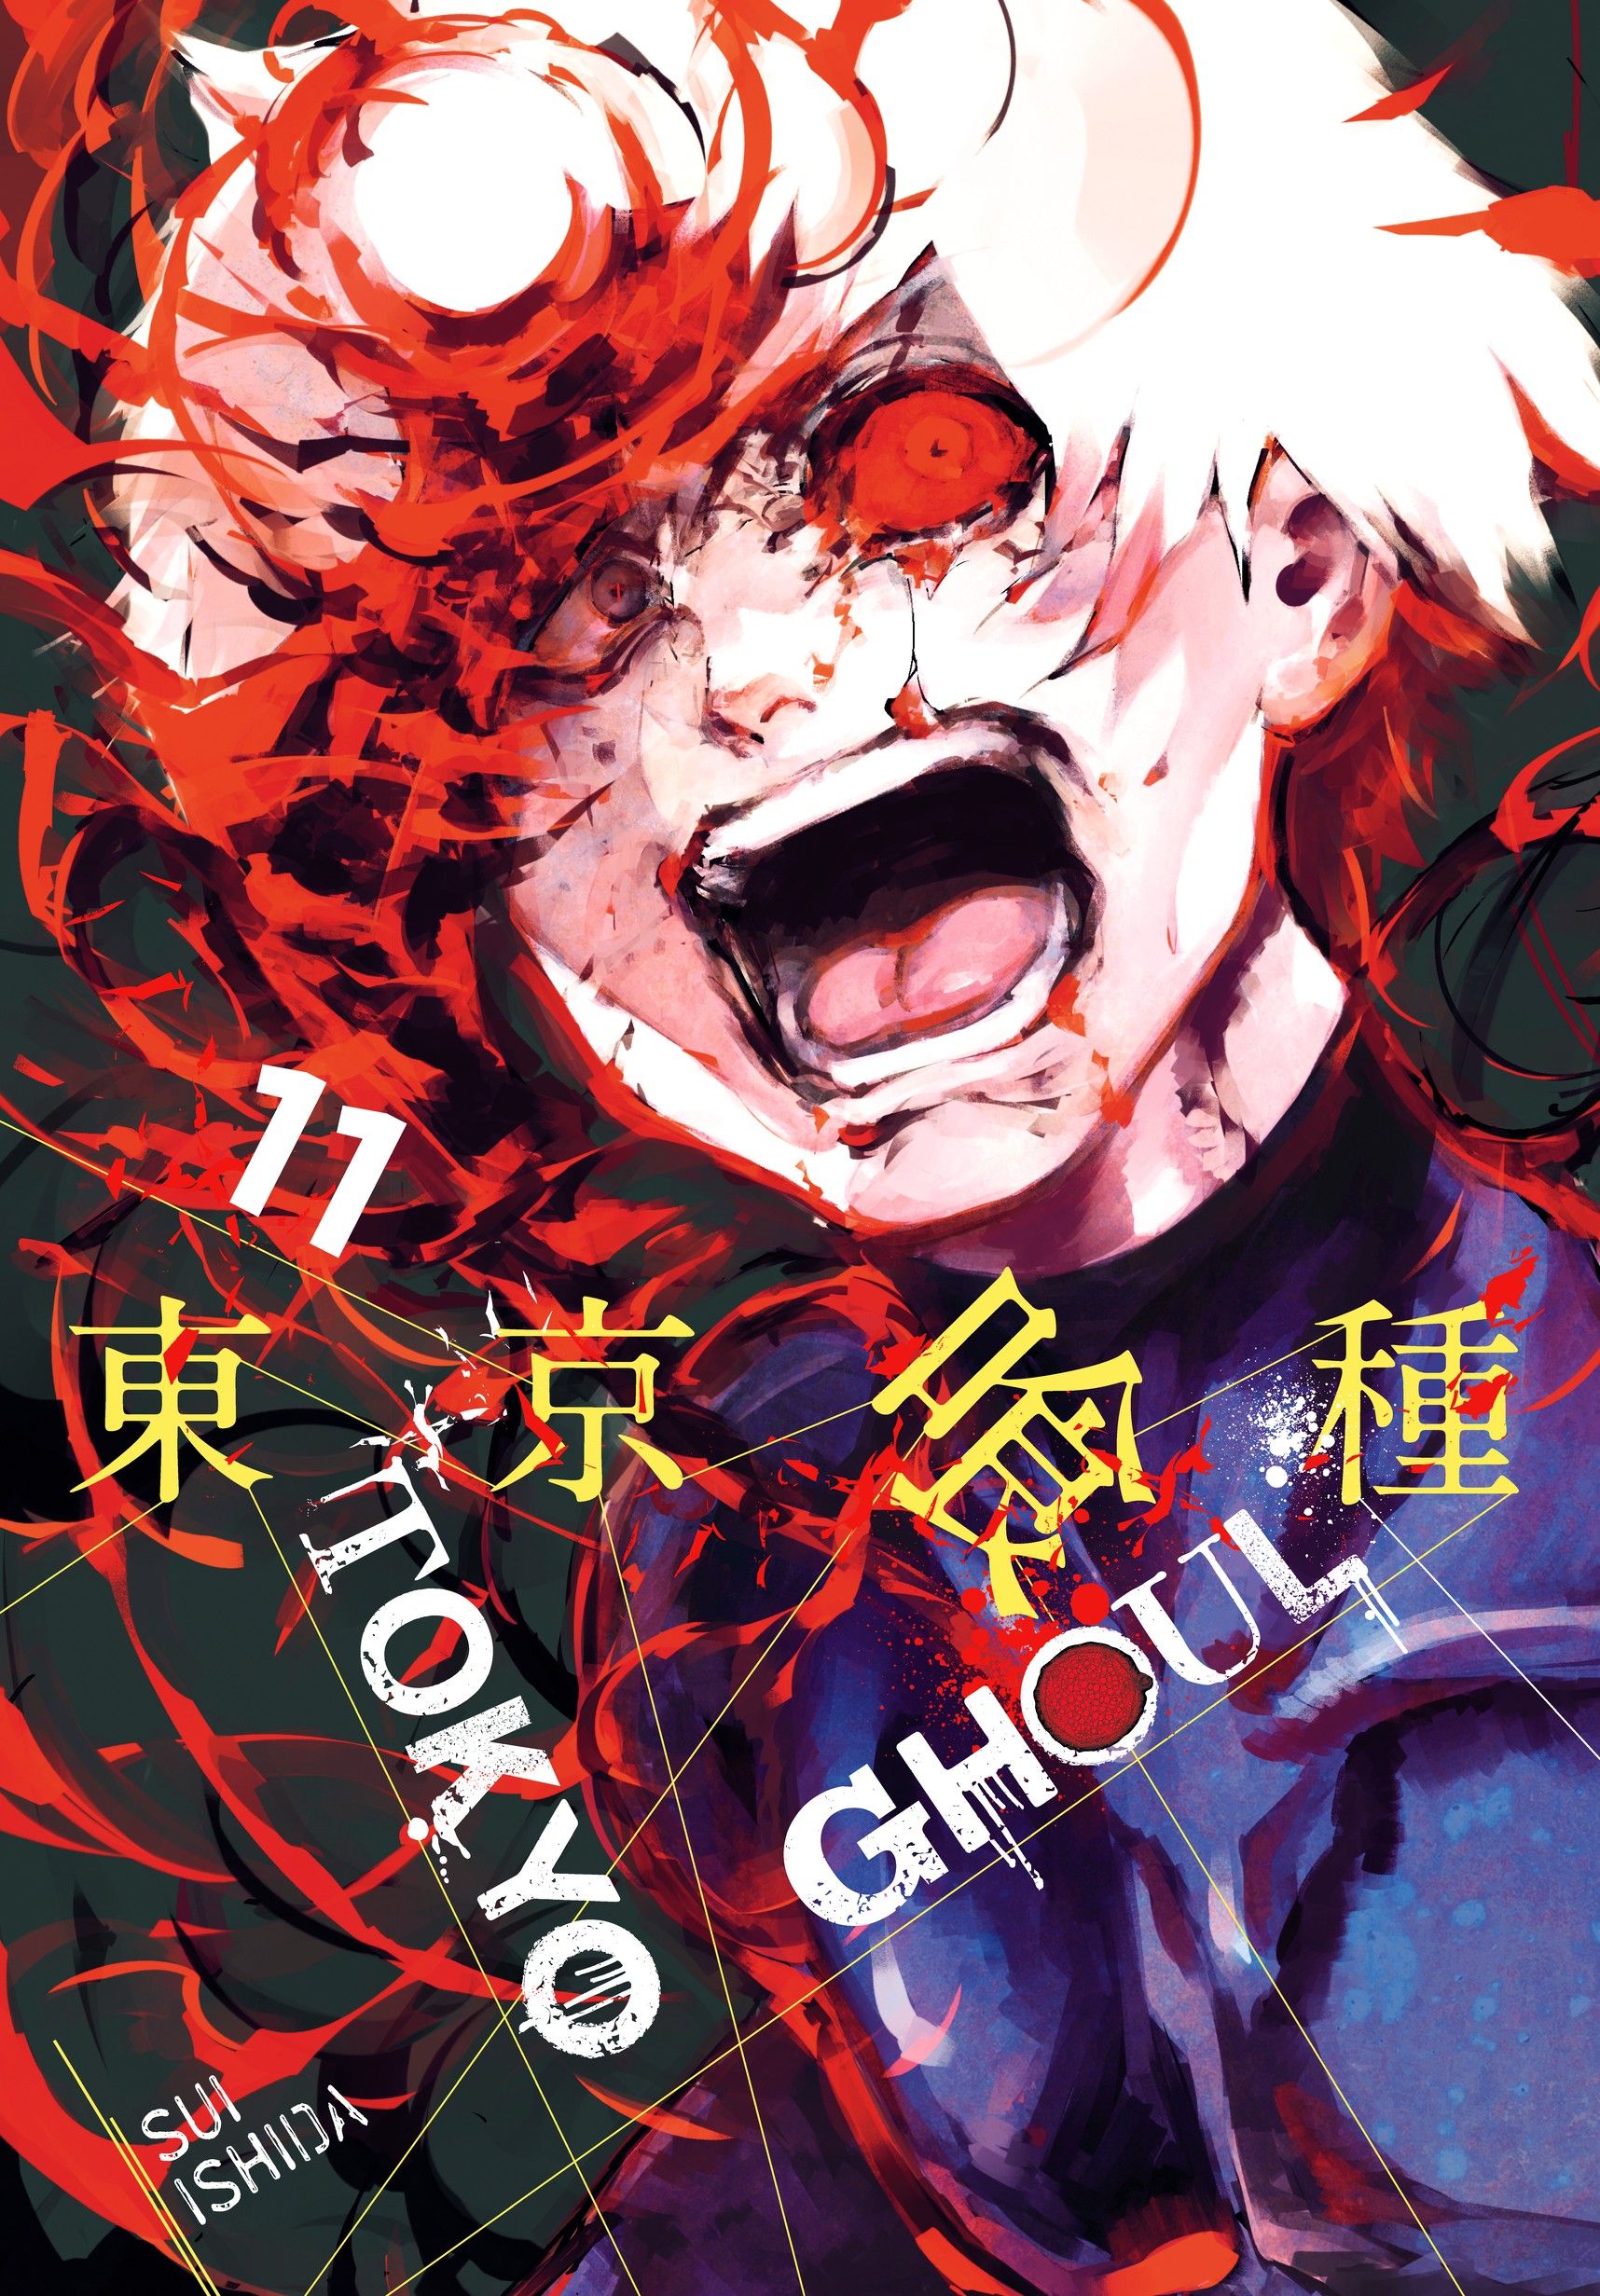 Tokyo Ghoul volume cover 11 featuring Kaneki screaming